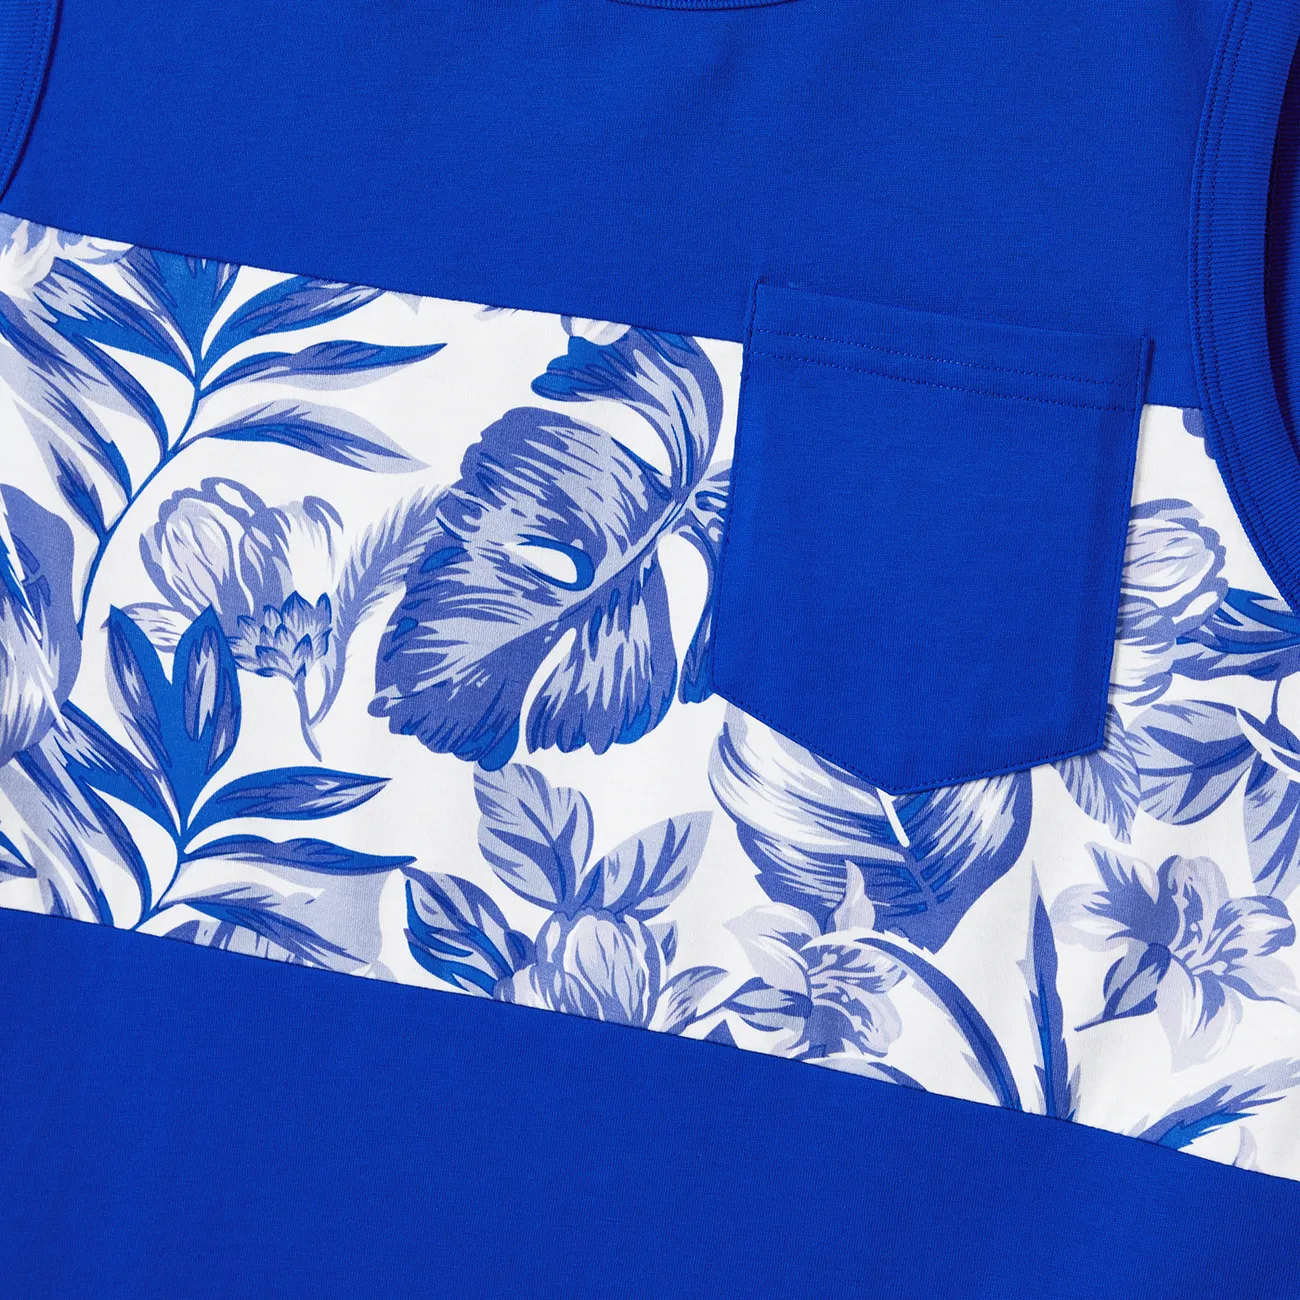 Family Matching Color Block Sleeveless Shirt and Floral Cami Button Hi-Low Dress Sets Royal Blue big image 1